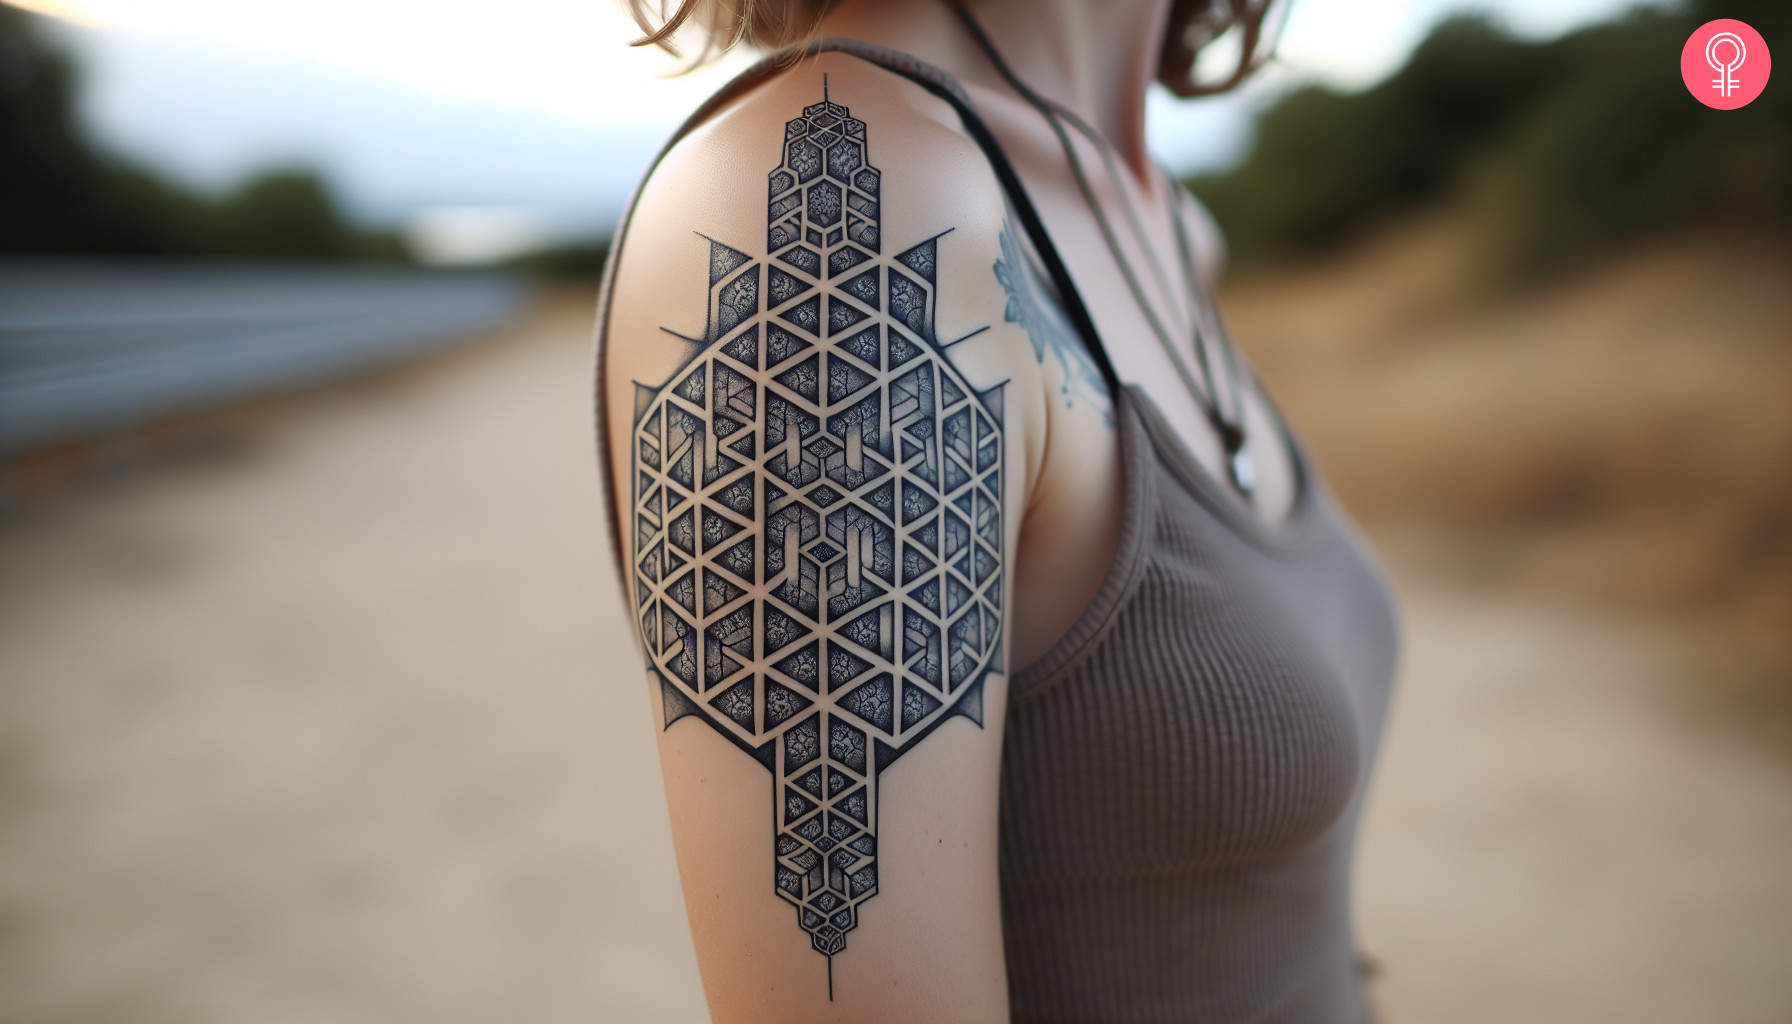 Honeycomb fractal tattoo on a woman’s arm